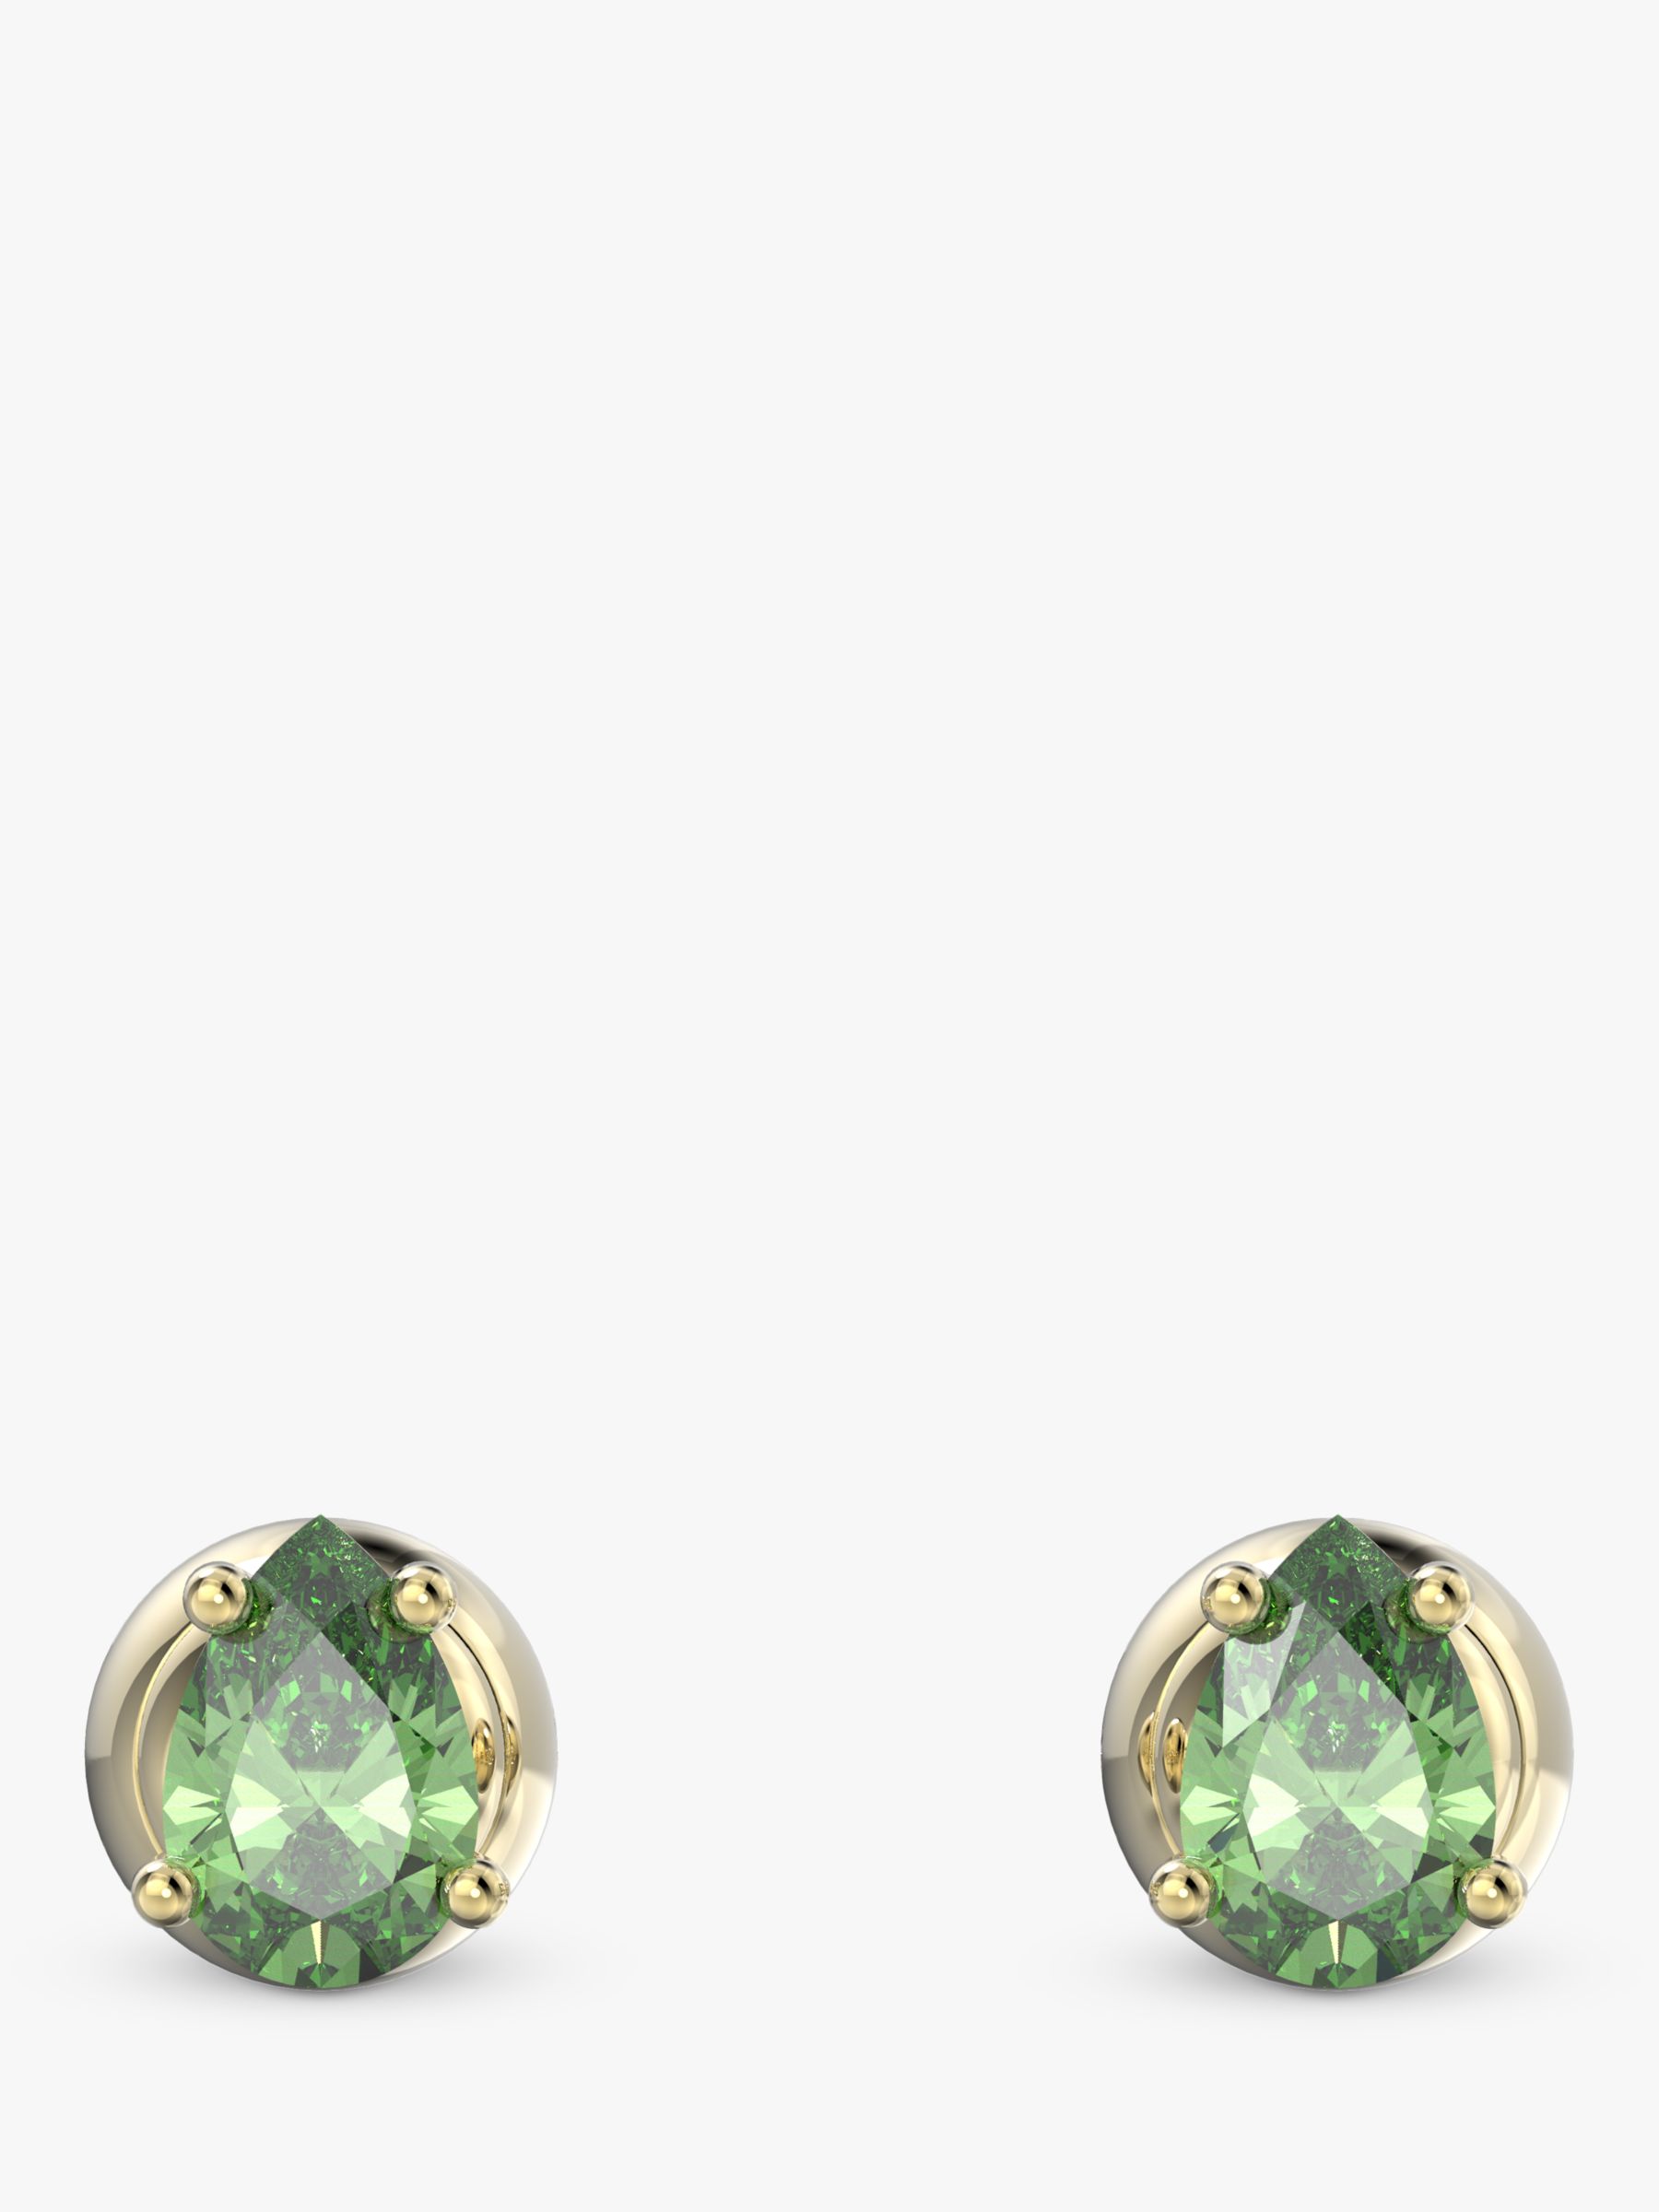 Swarovski Stilla Crystal Teardrop Stud Earrings, Gold/Green